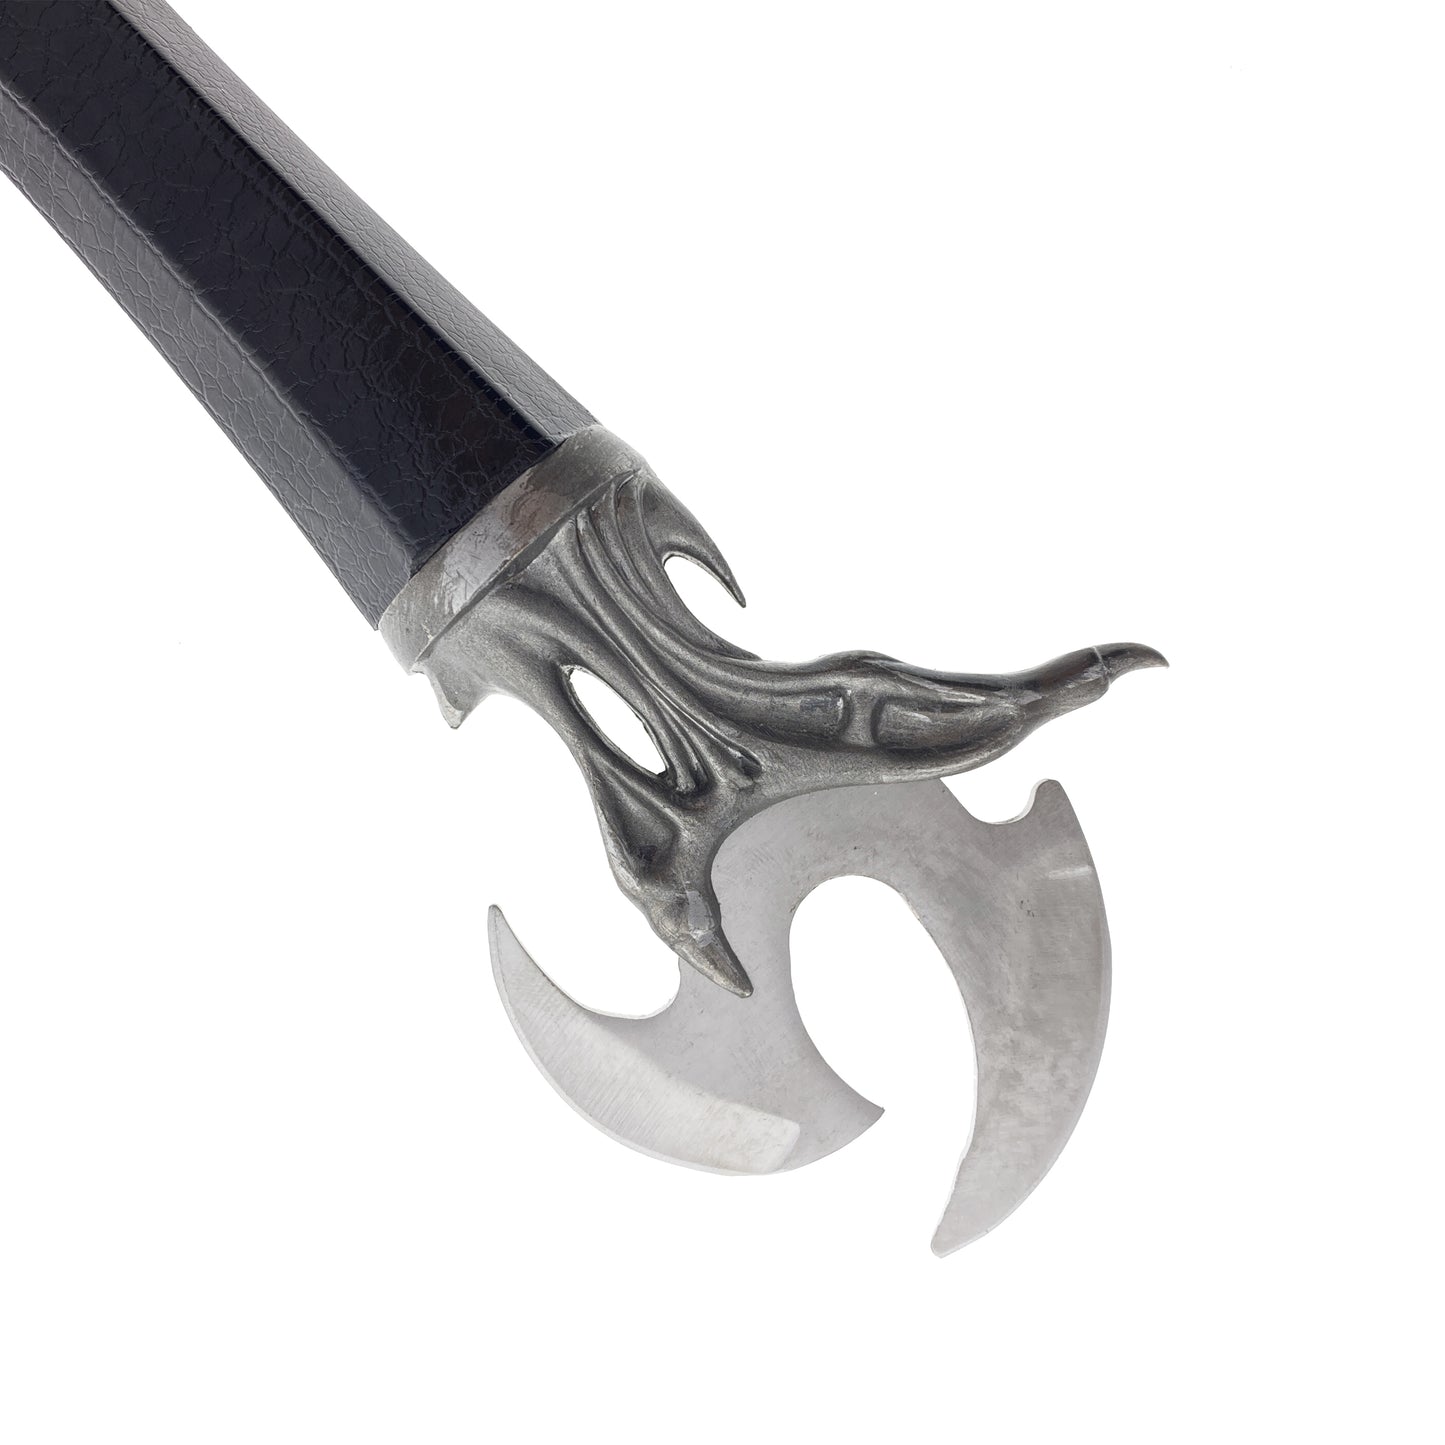 20" Fantasy Axe with Detachable Claw Dagger